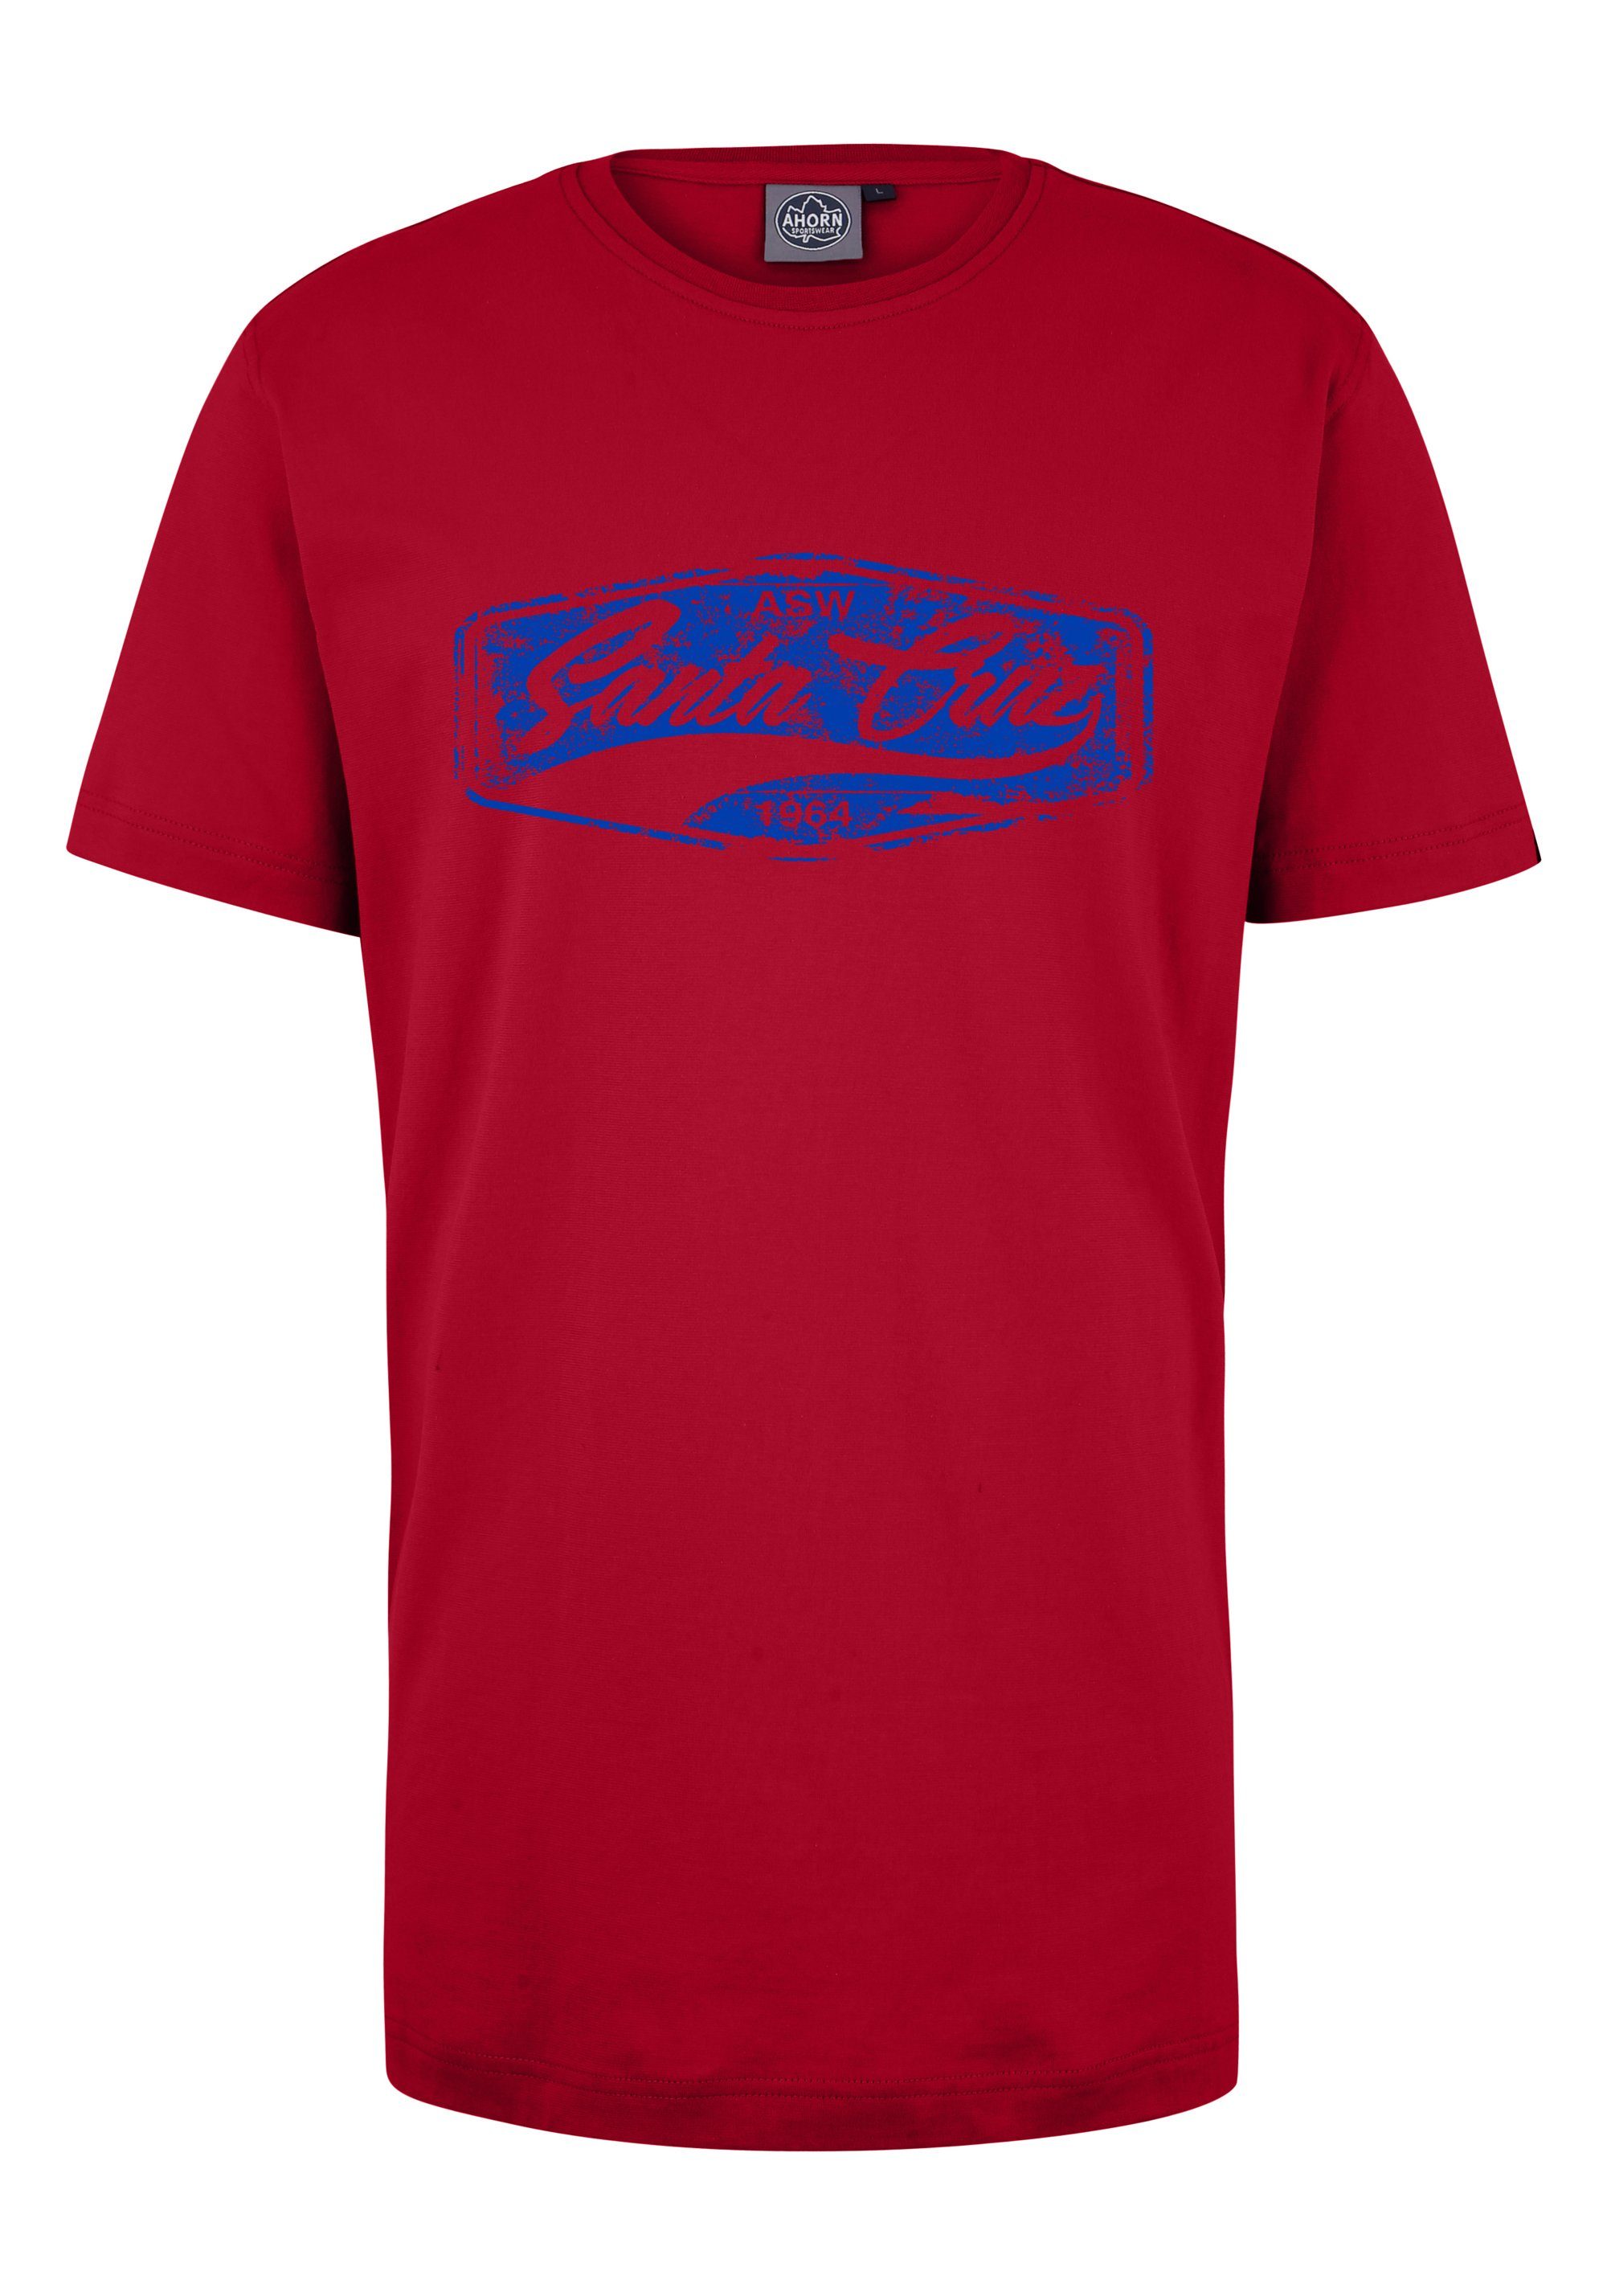 AHORN SPORTSWEAR T-Shirt SANTA CRUZ_ROYAL BLUE mit modischem Frontprint rot